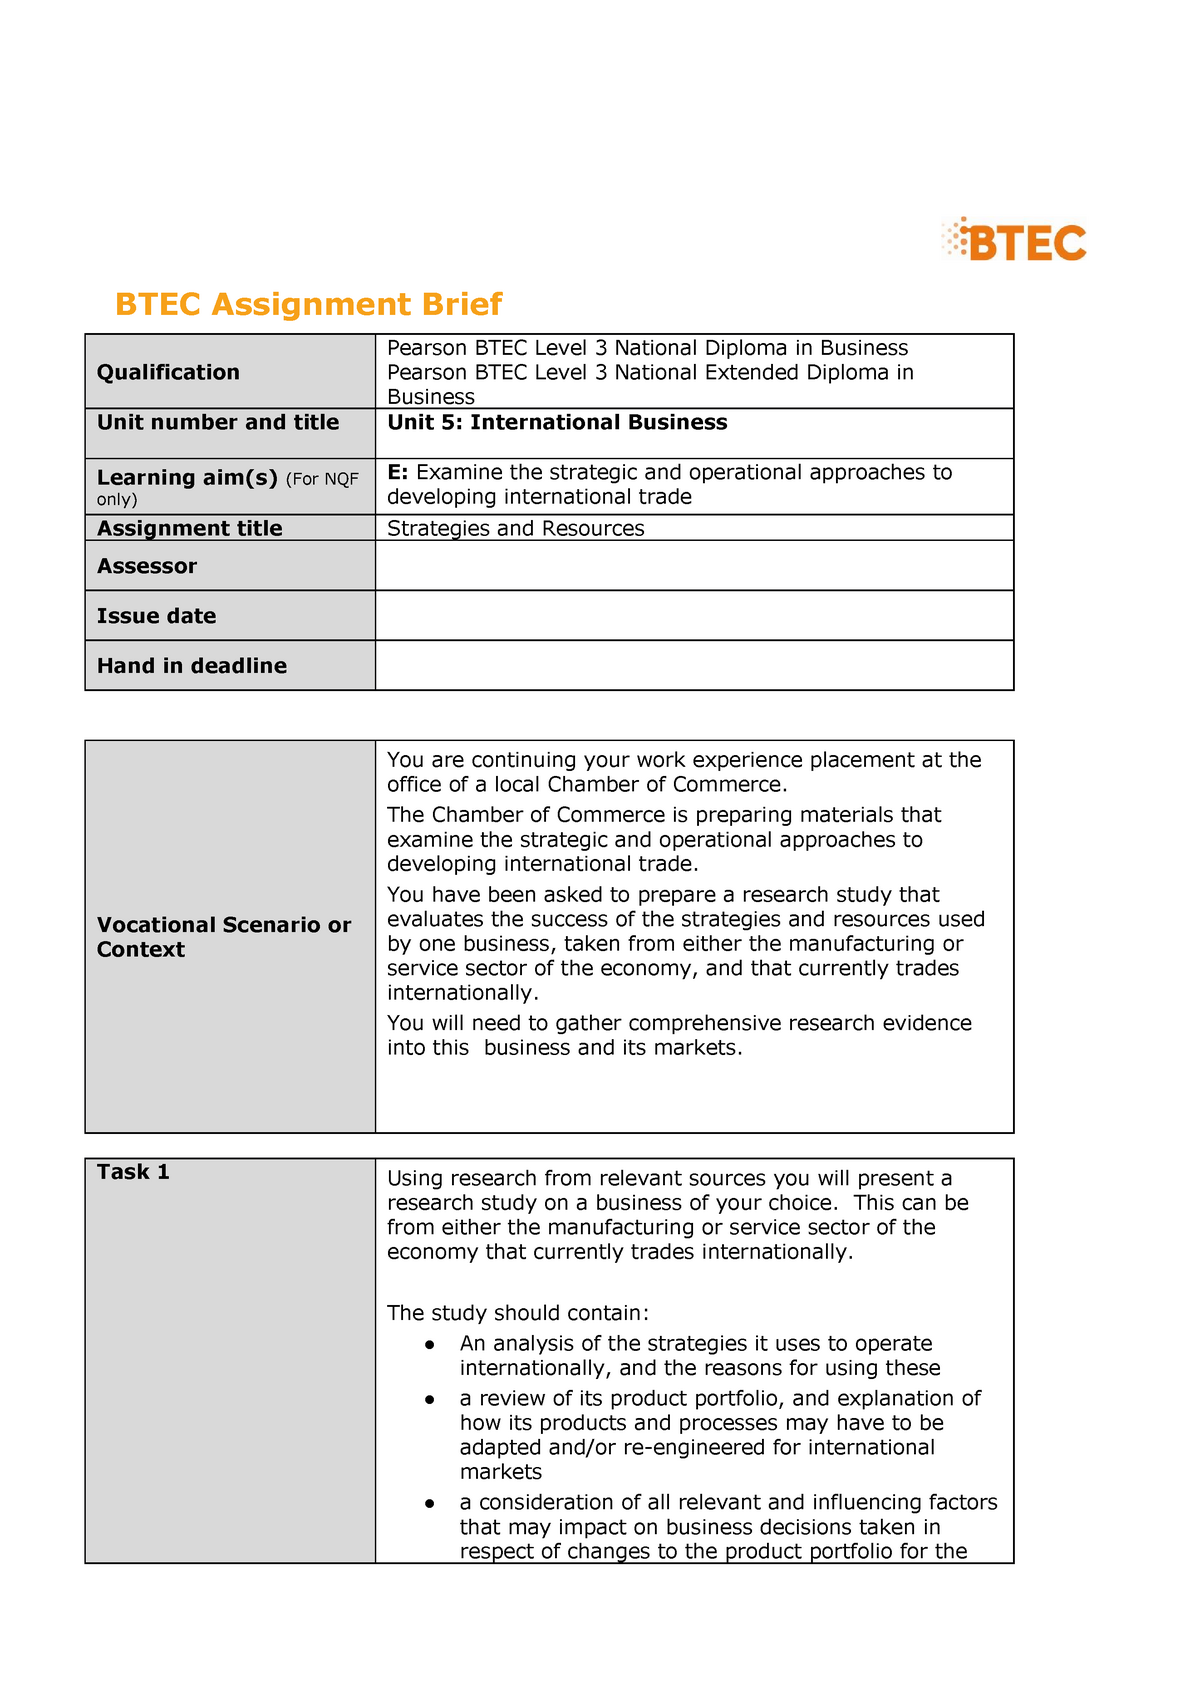 description of assignment brief